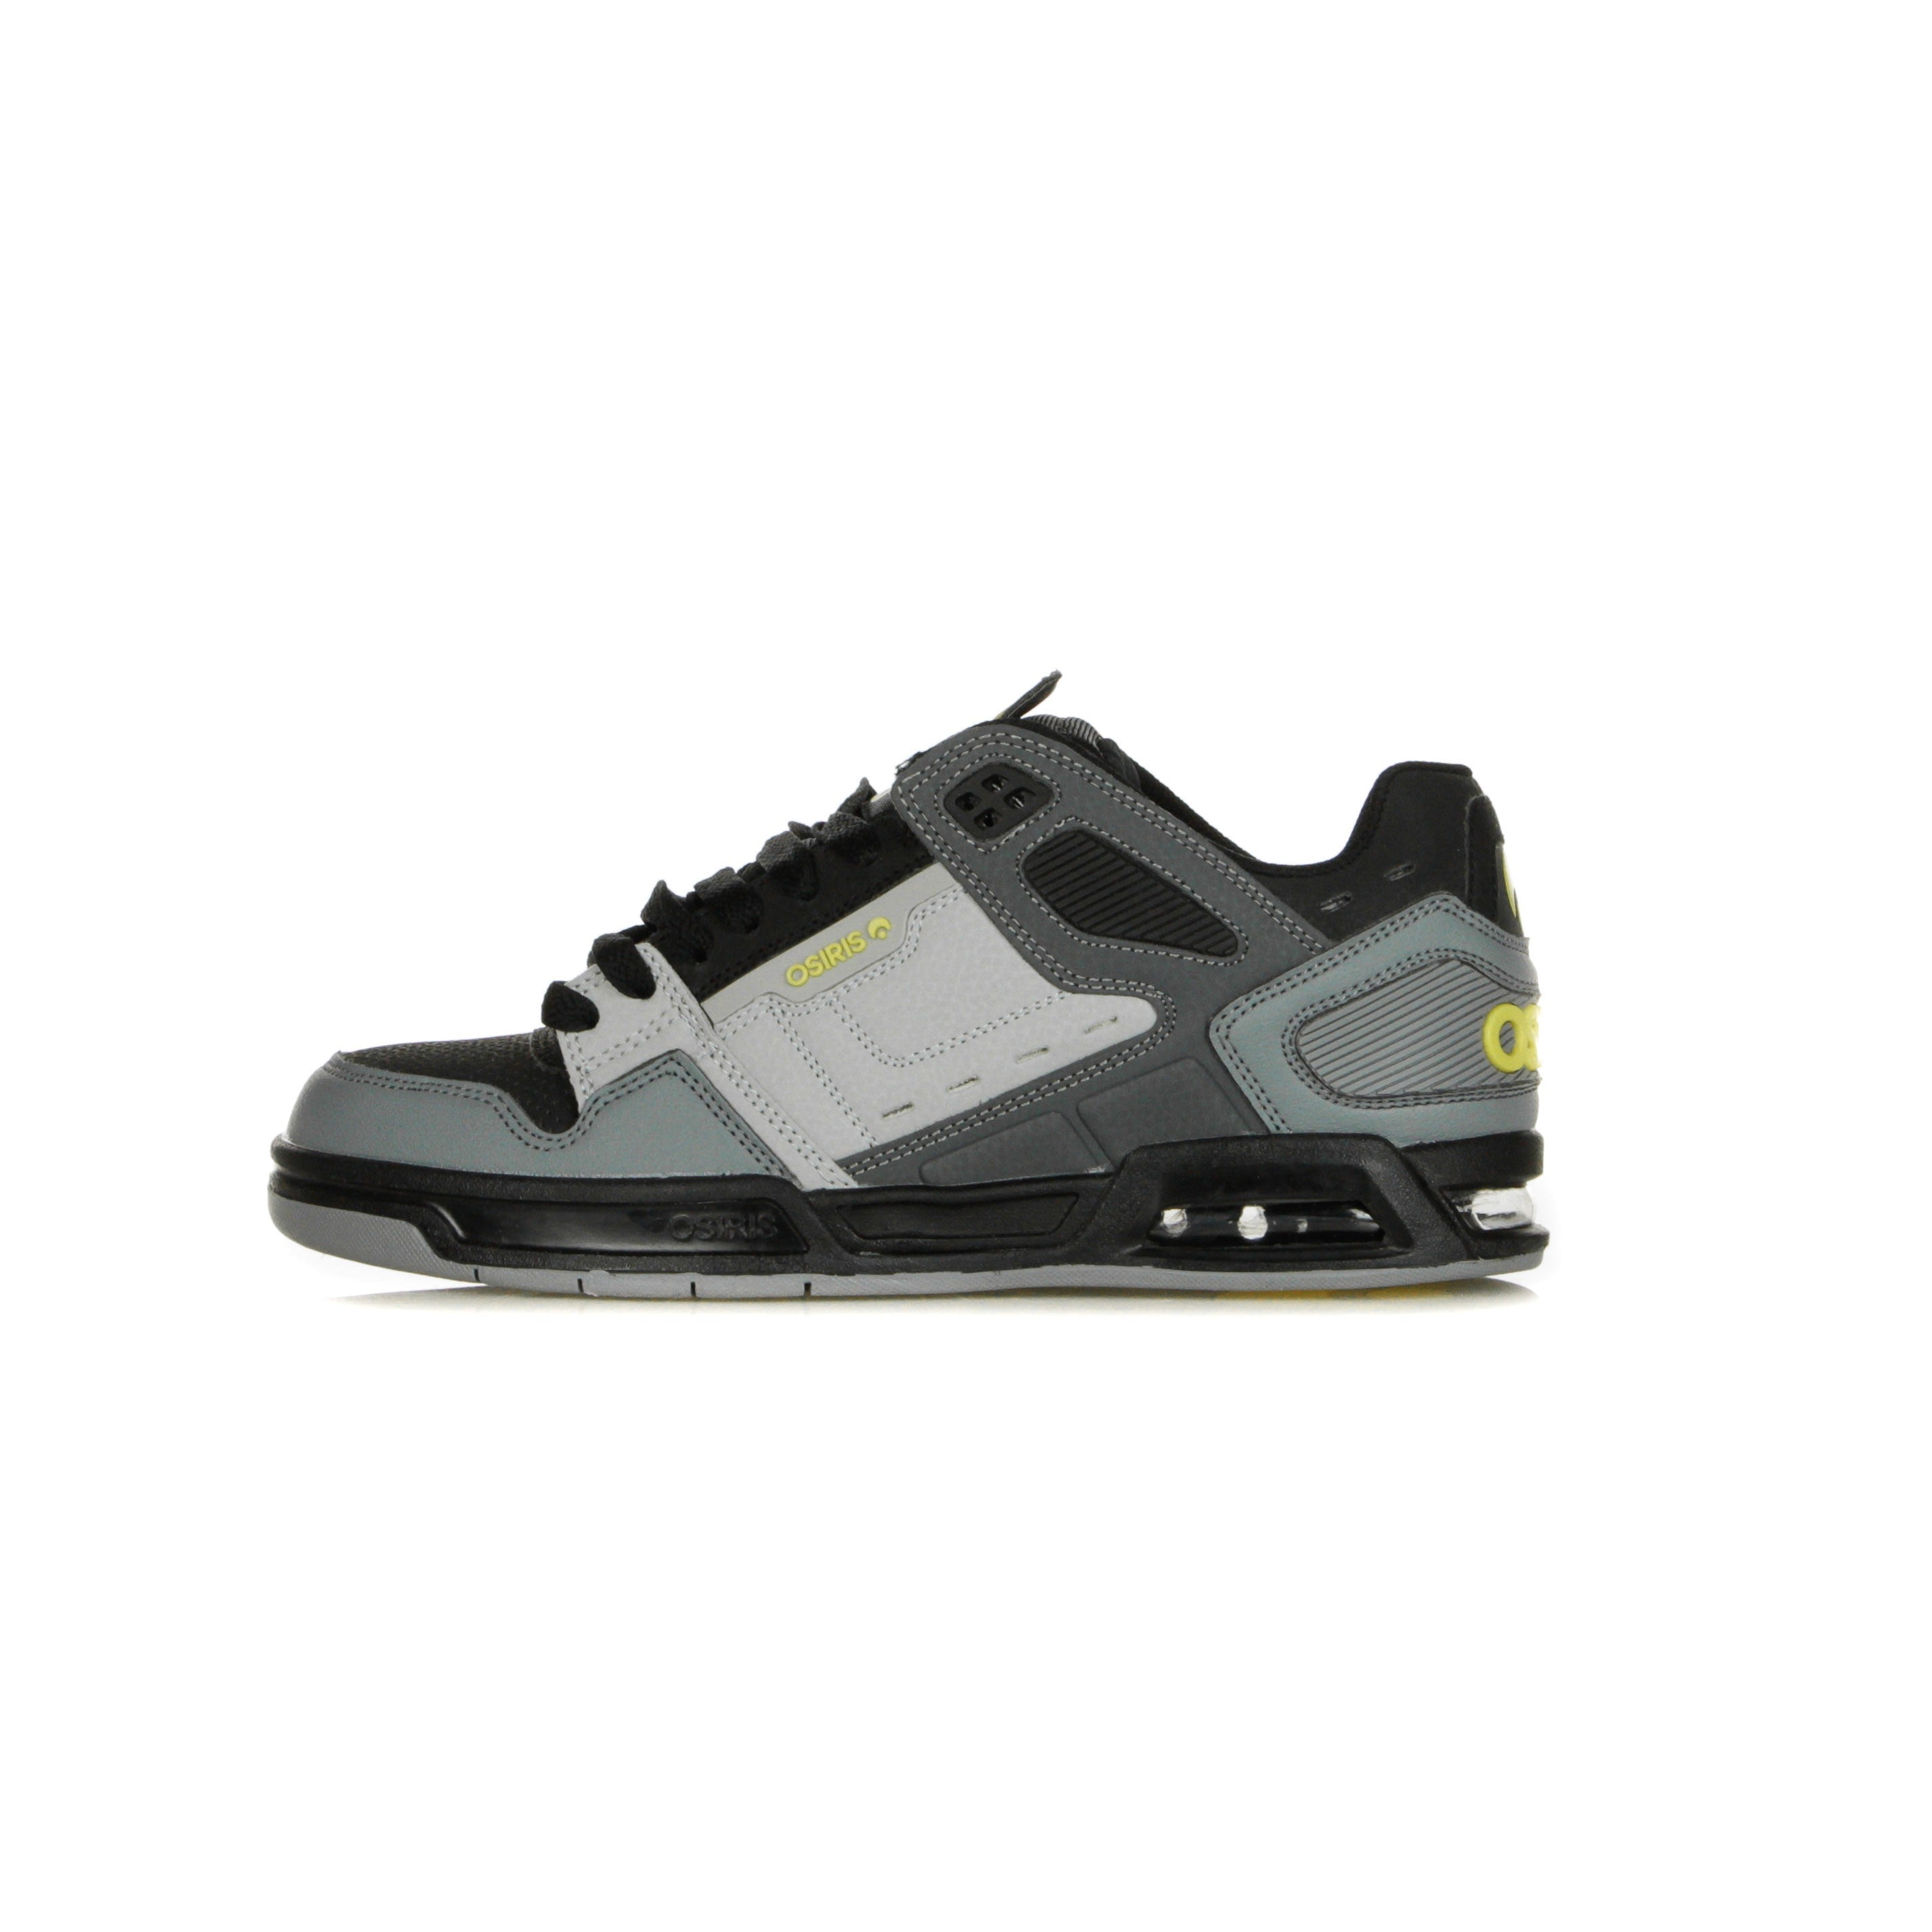 Peril Men's Skate Shoes Charcoal/black/yellow